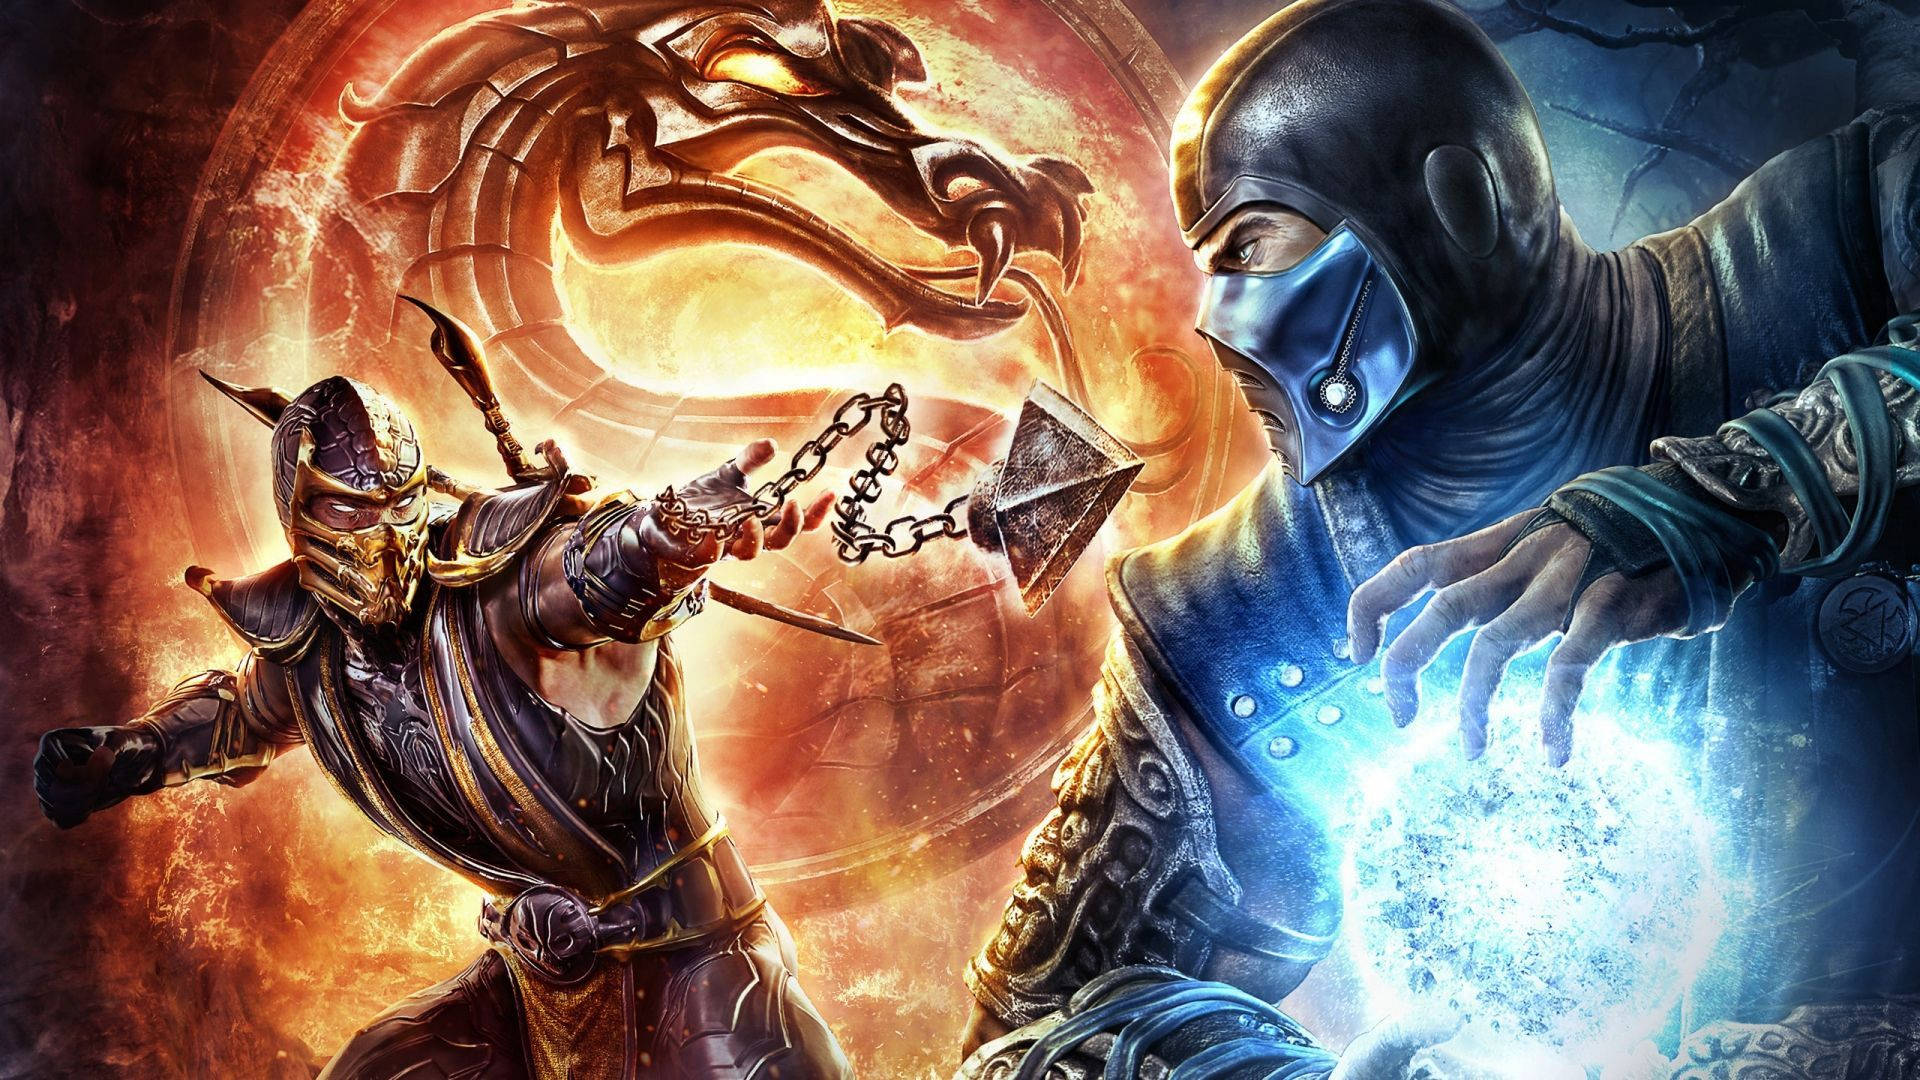 Mortal Kombat Scorpion Vs Sub Zero Battle Wallpaper